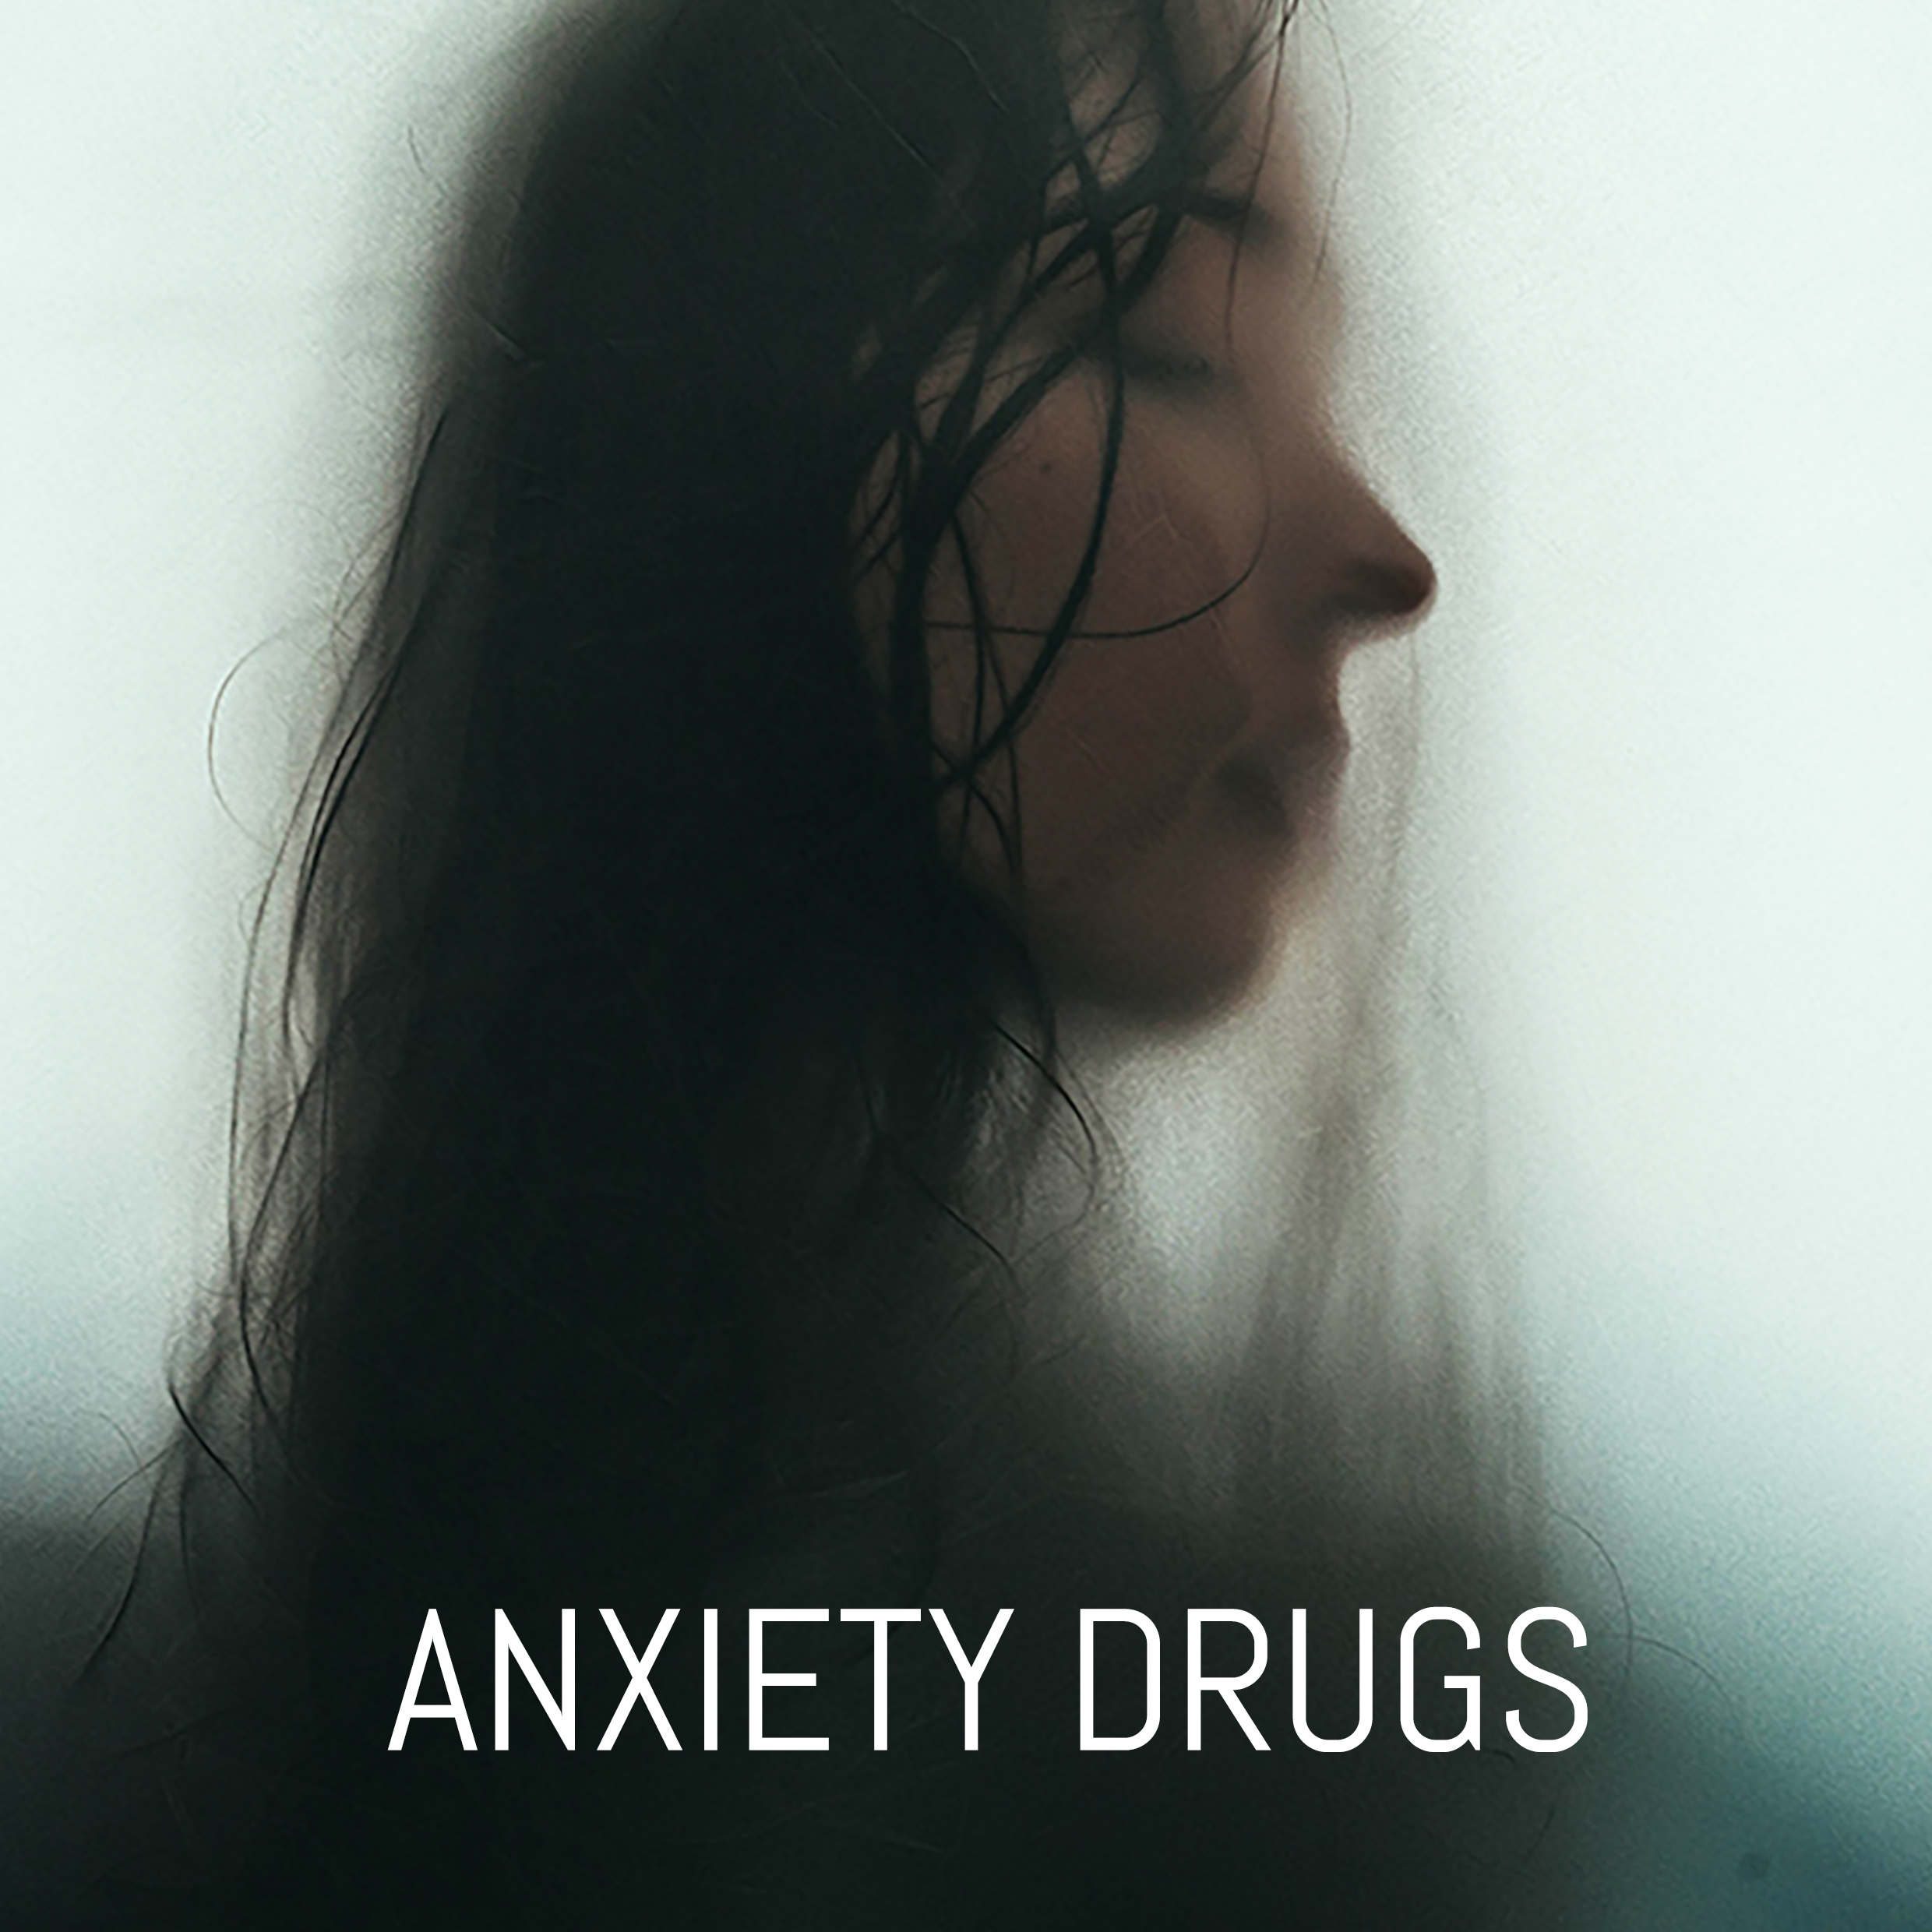 ALTERNATIVE TO ANXIETY DRUGS